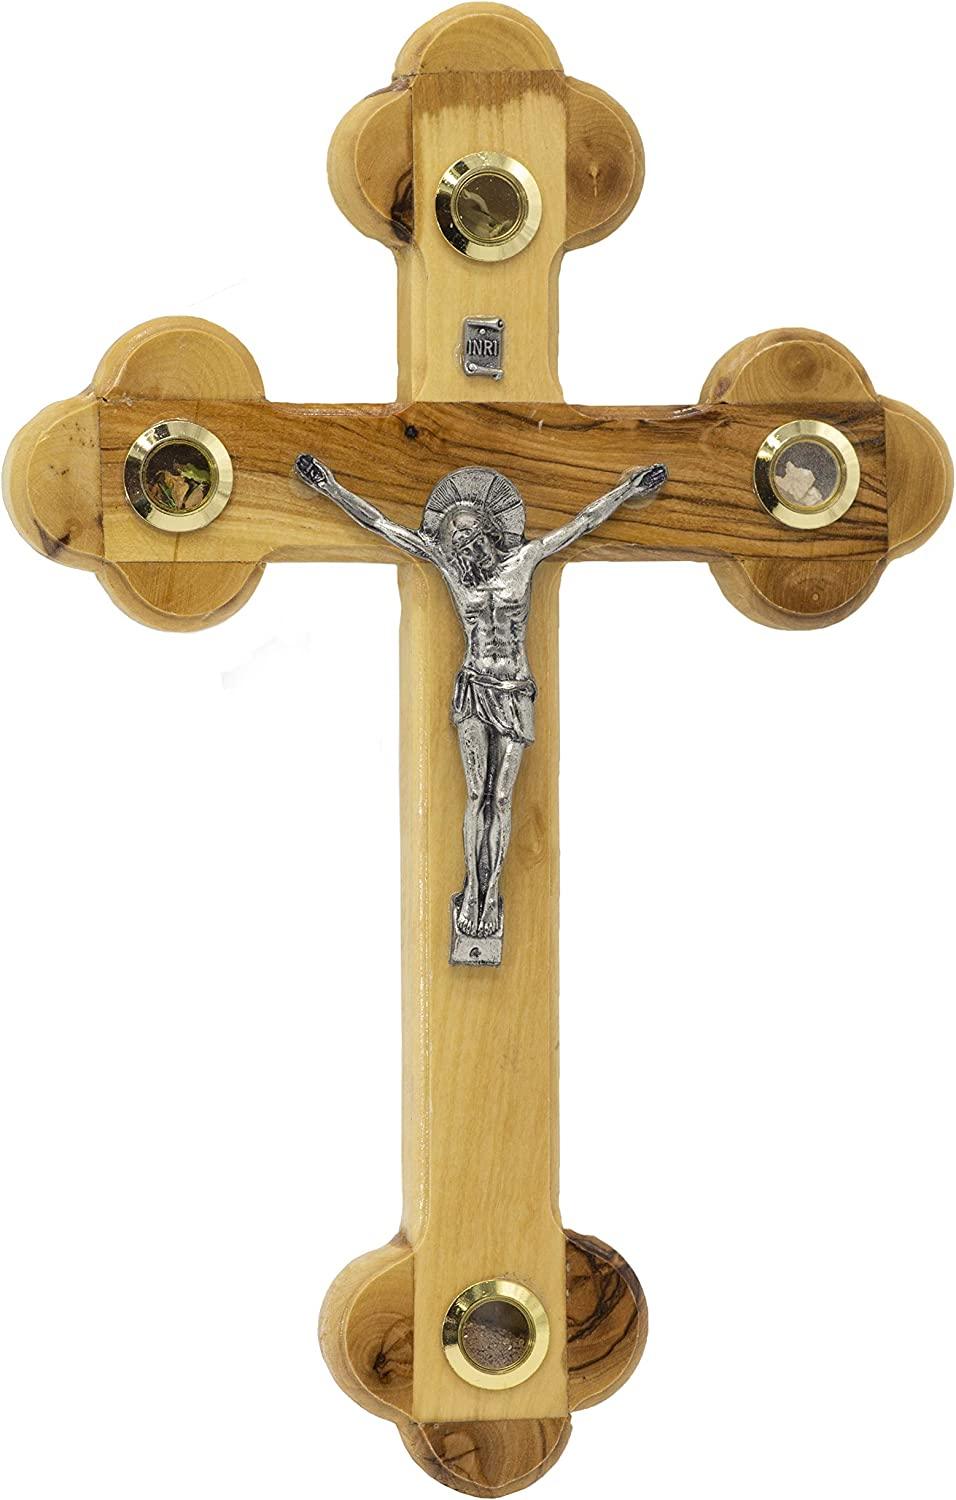 Christian wooden cross - Spring Nahal